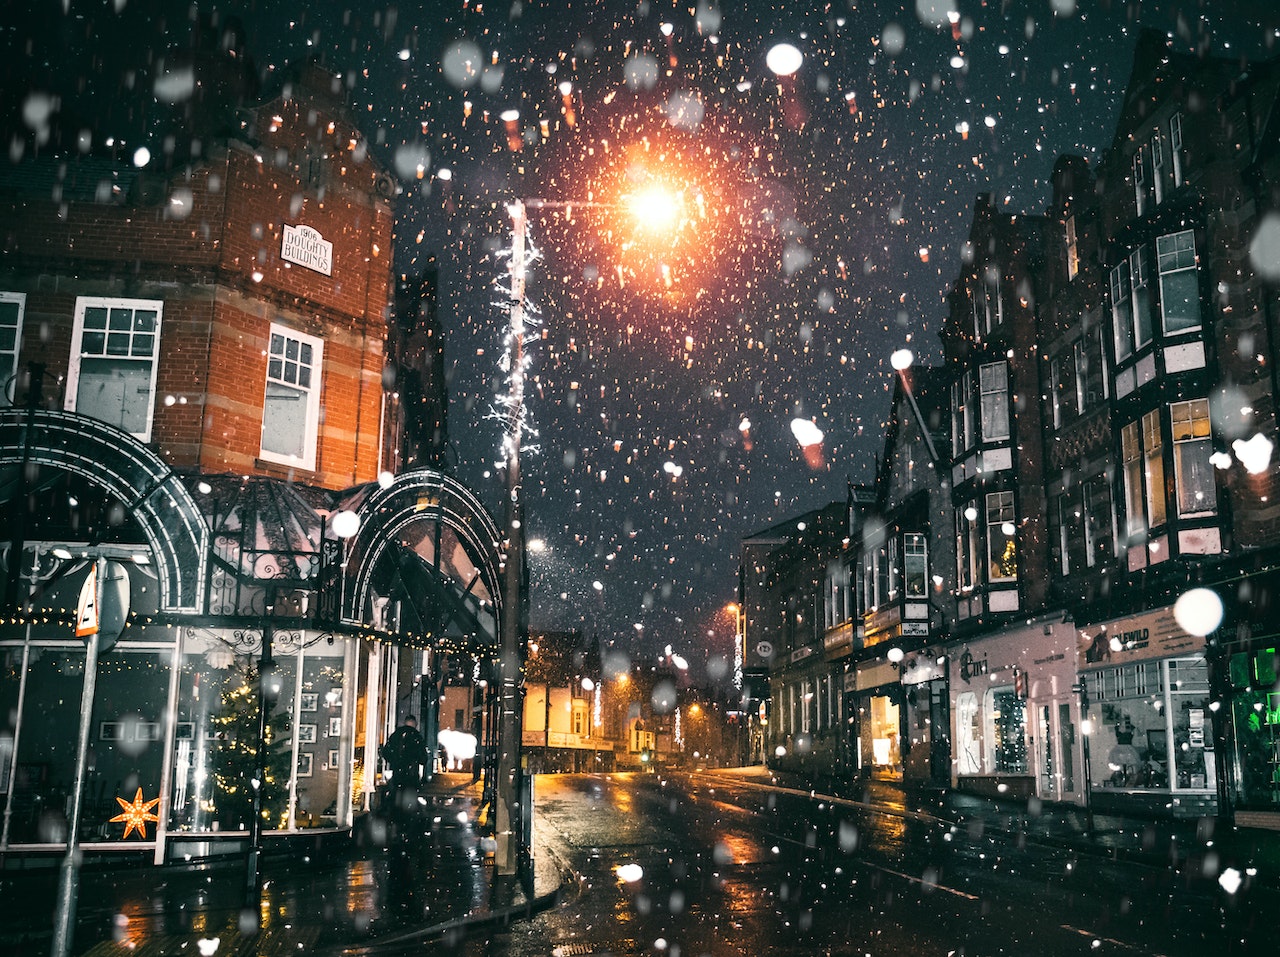 Snowfall on a dark street